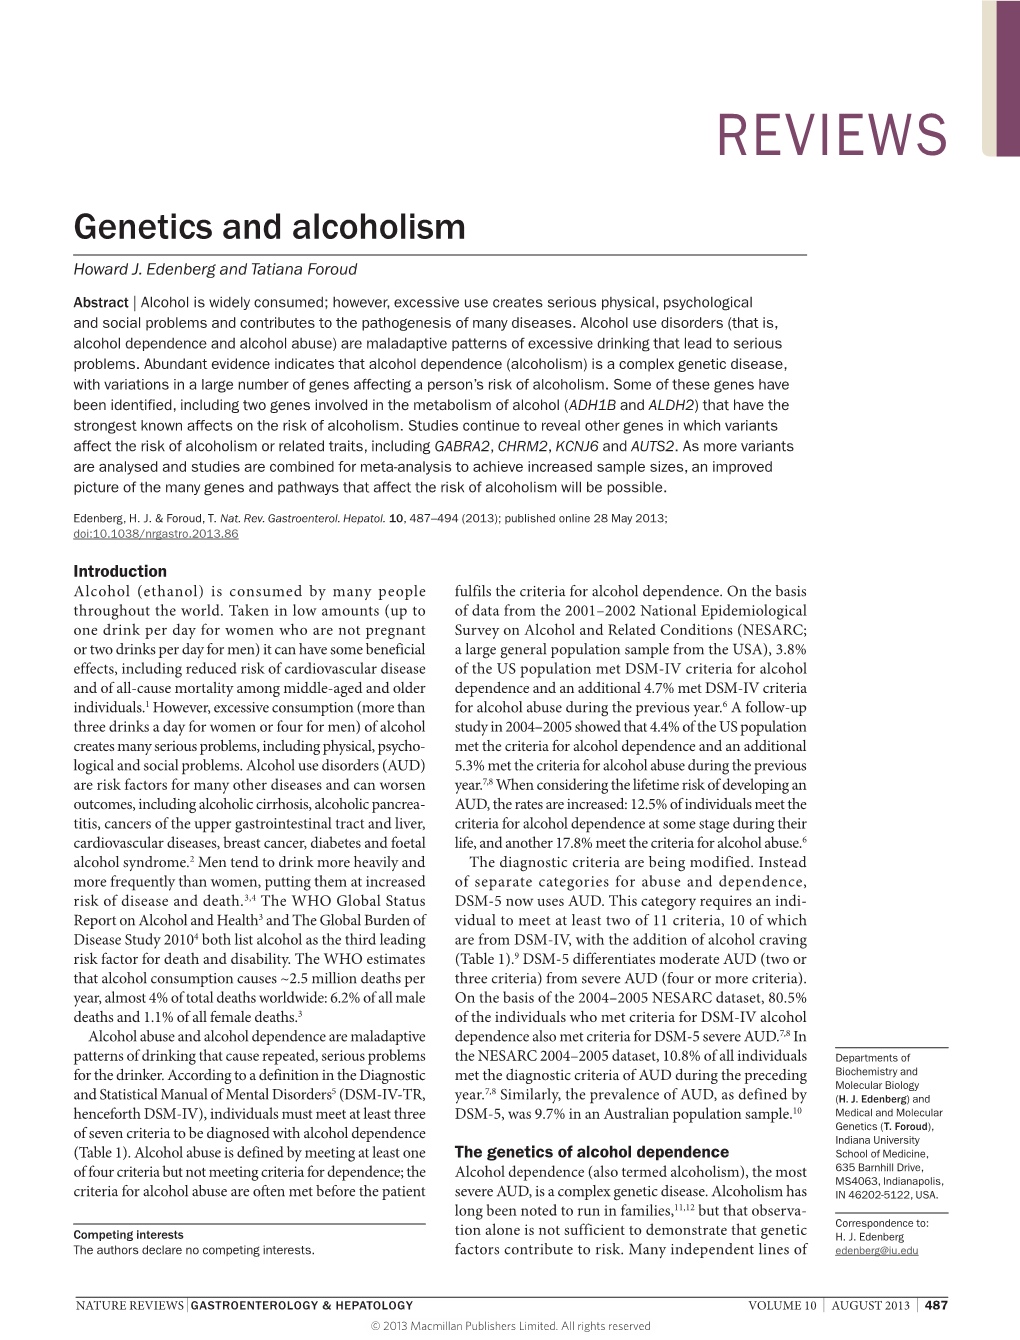 Genetics and Alcoholism Howard J